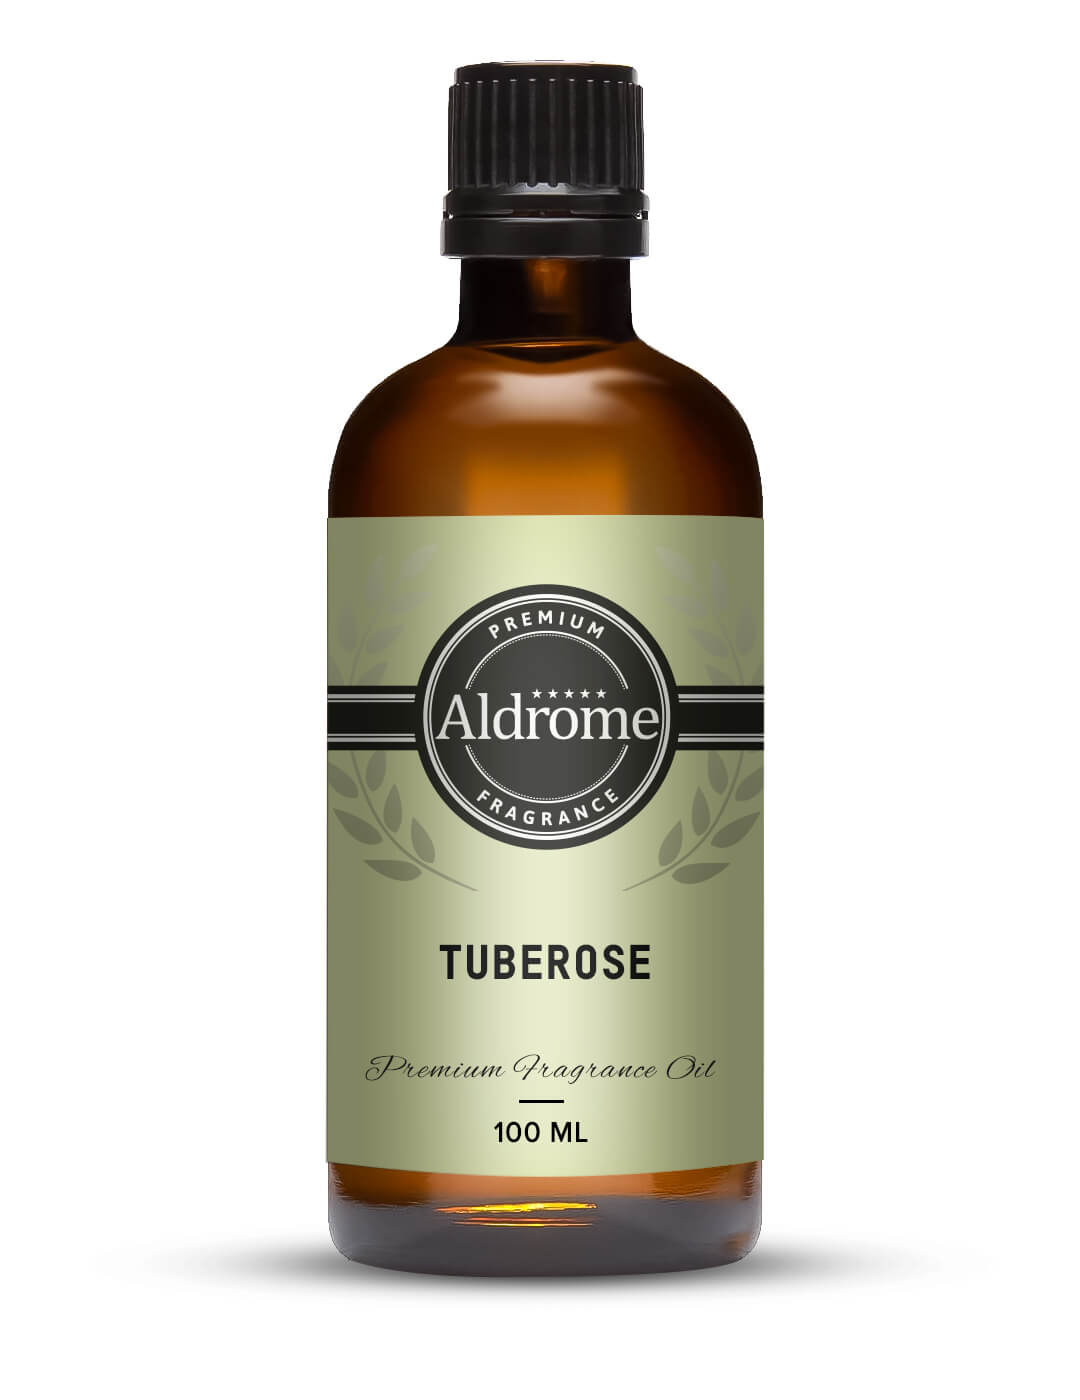 Tuberose Fragrance Oil - 100ml | Buy Tuberose Fragrance Oil | Aldrome Premium Fragrance Oil